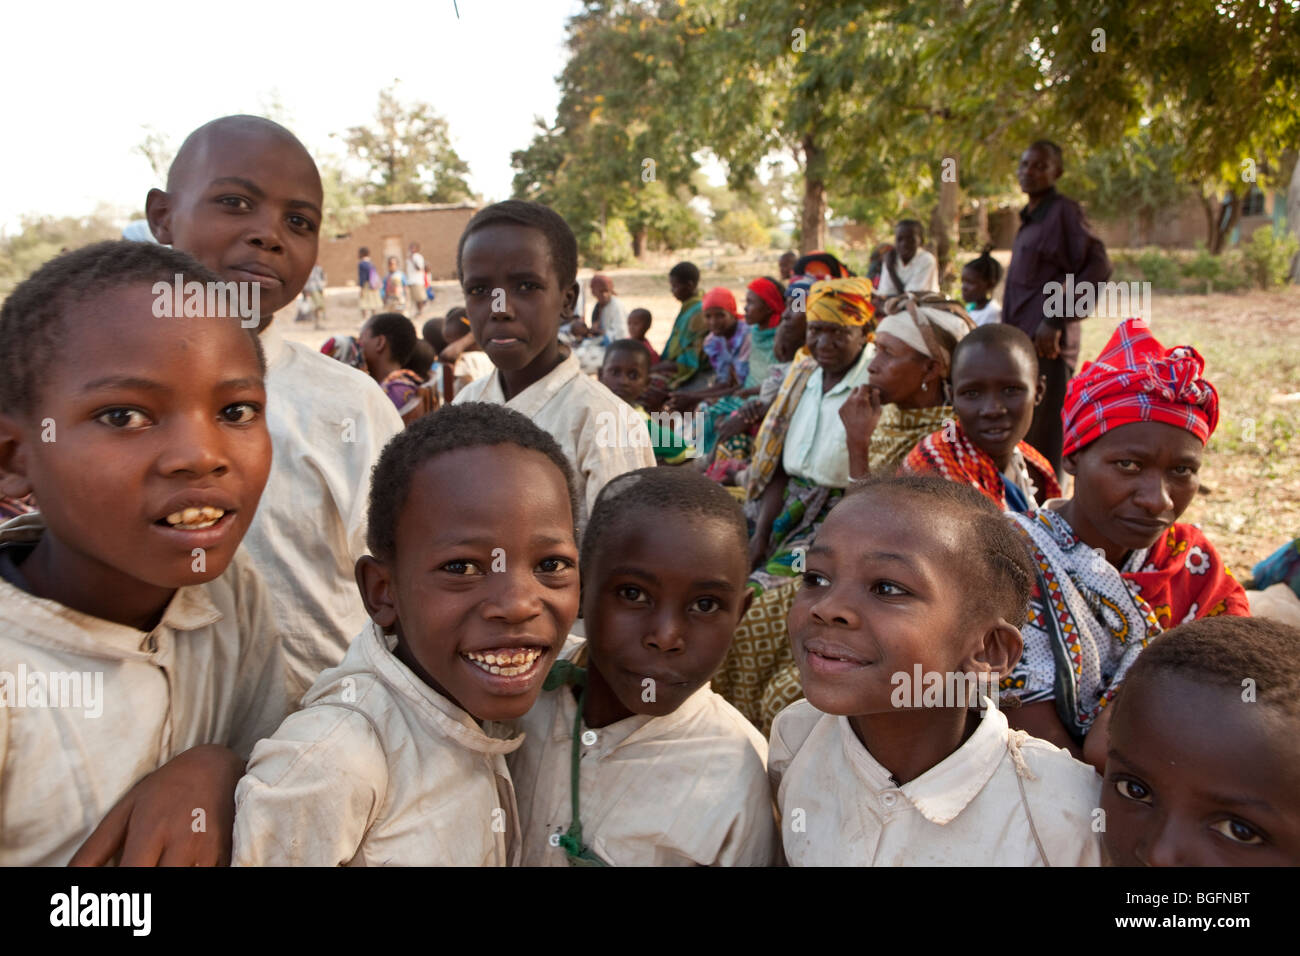 Kinder außerhalb einer Schule in Tansania: Manyara Region, Simanjiro Bezirk Kilombero Dorf. Stockfoto